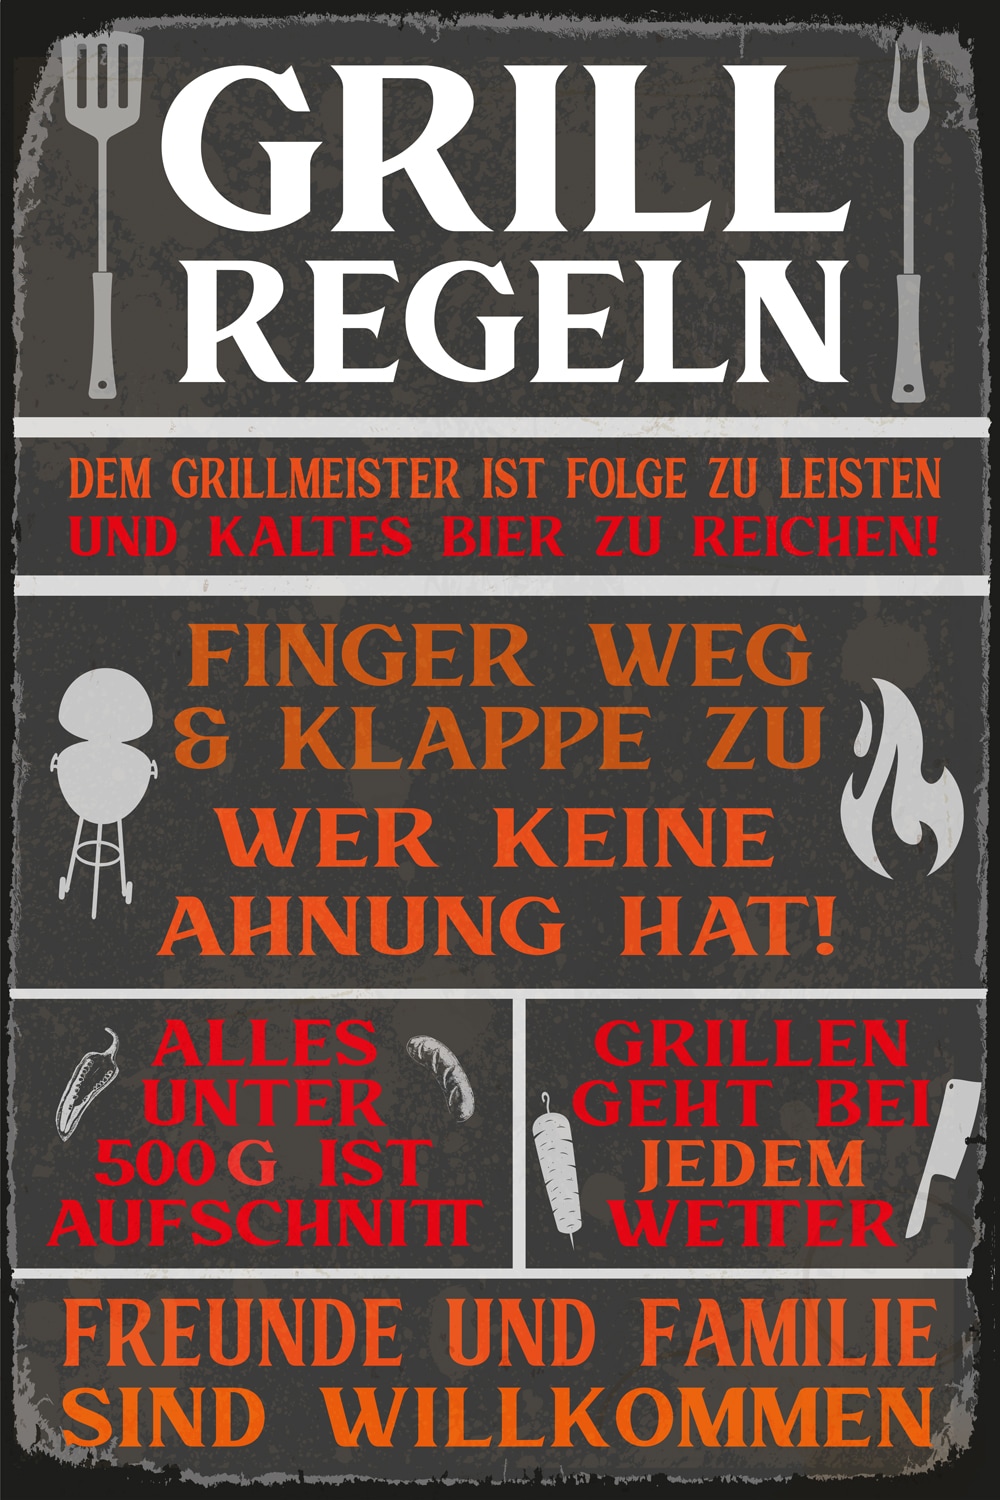 queence Metallbild »Grillregeln«, Geschirr & Besteck, (1 St.), 20x30cm inkl. Aufhängung, Outdoor geeignet